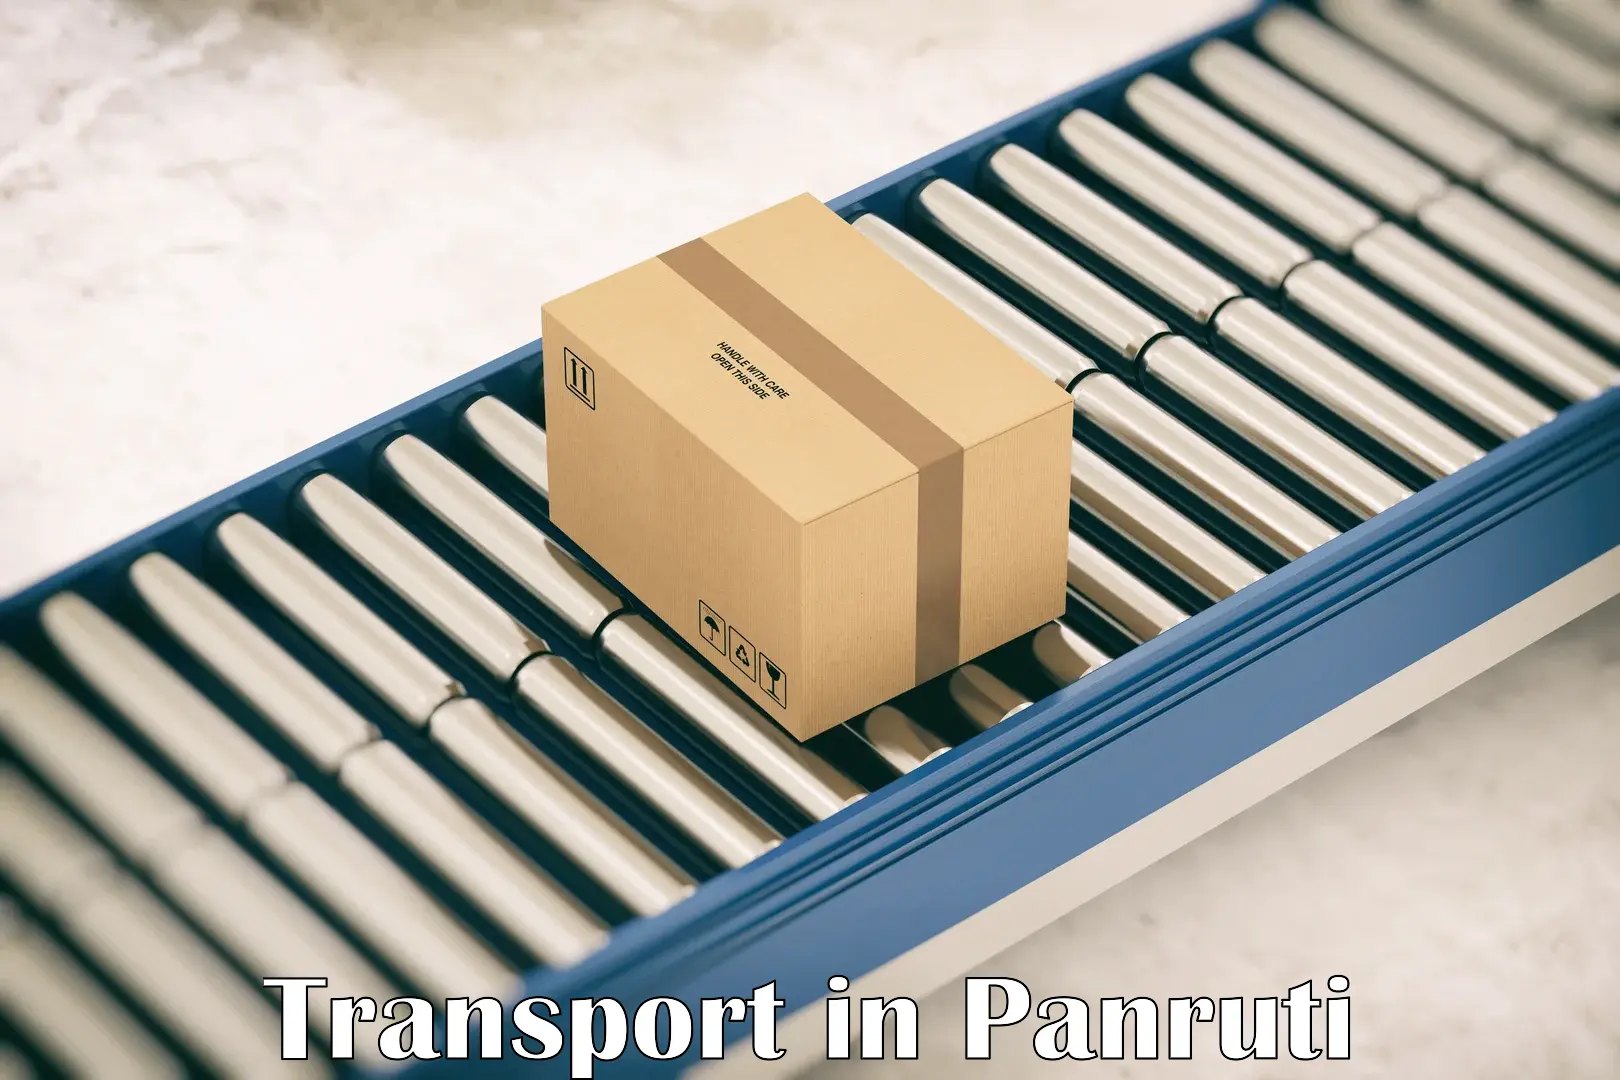 Transport in sharing in Panruti